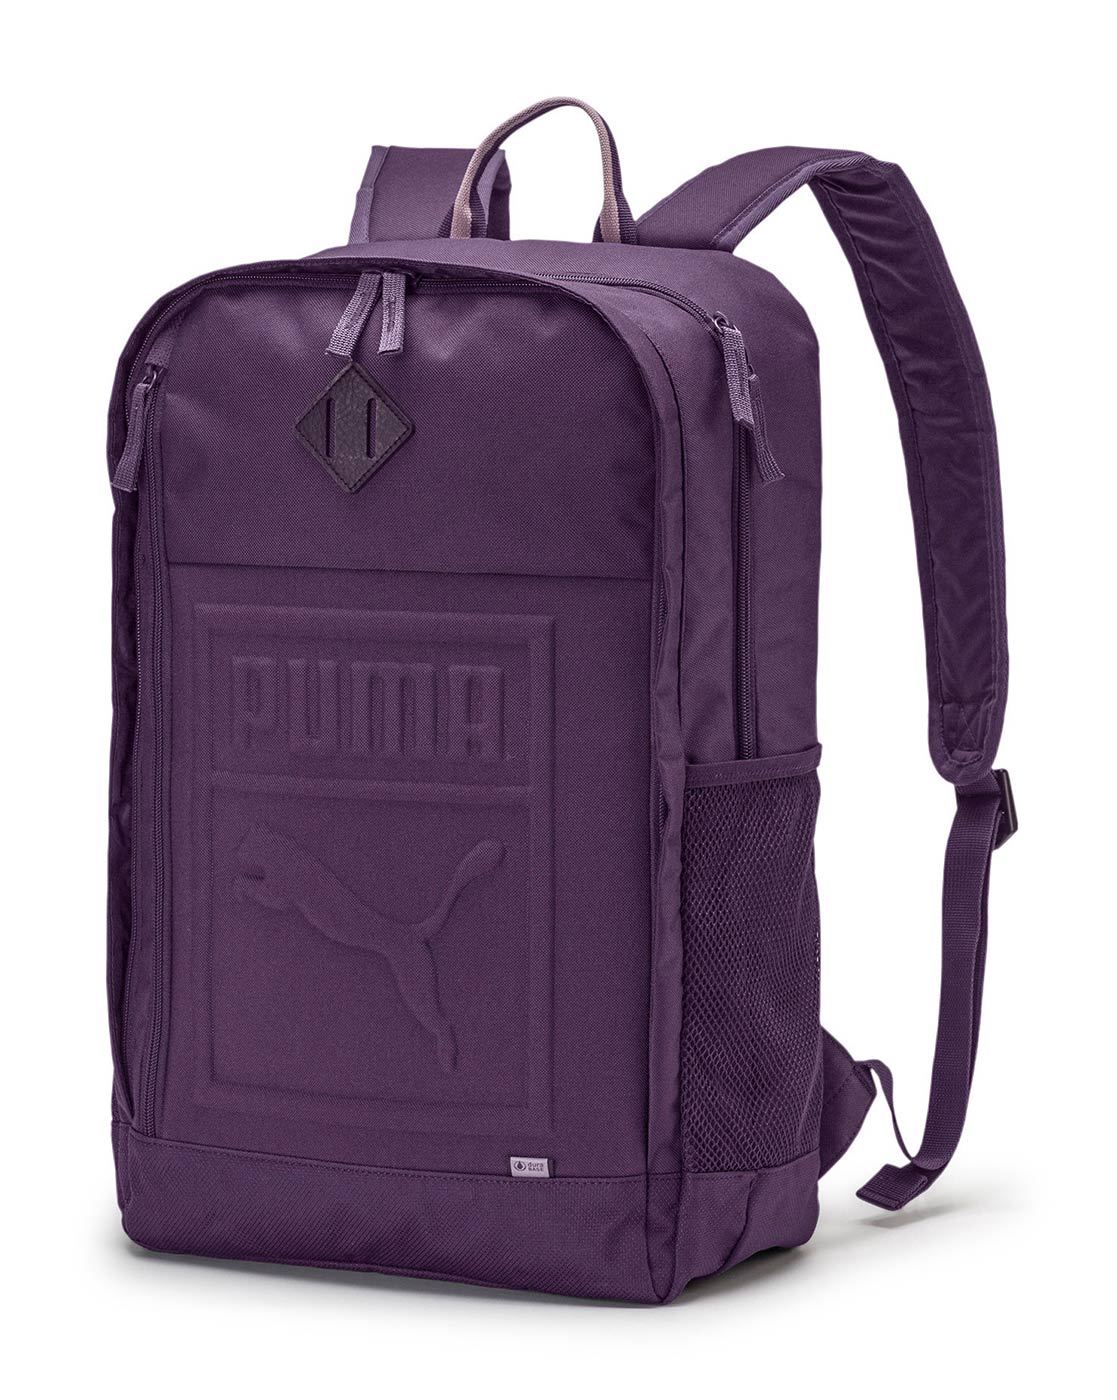 puma backpack purple